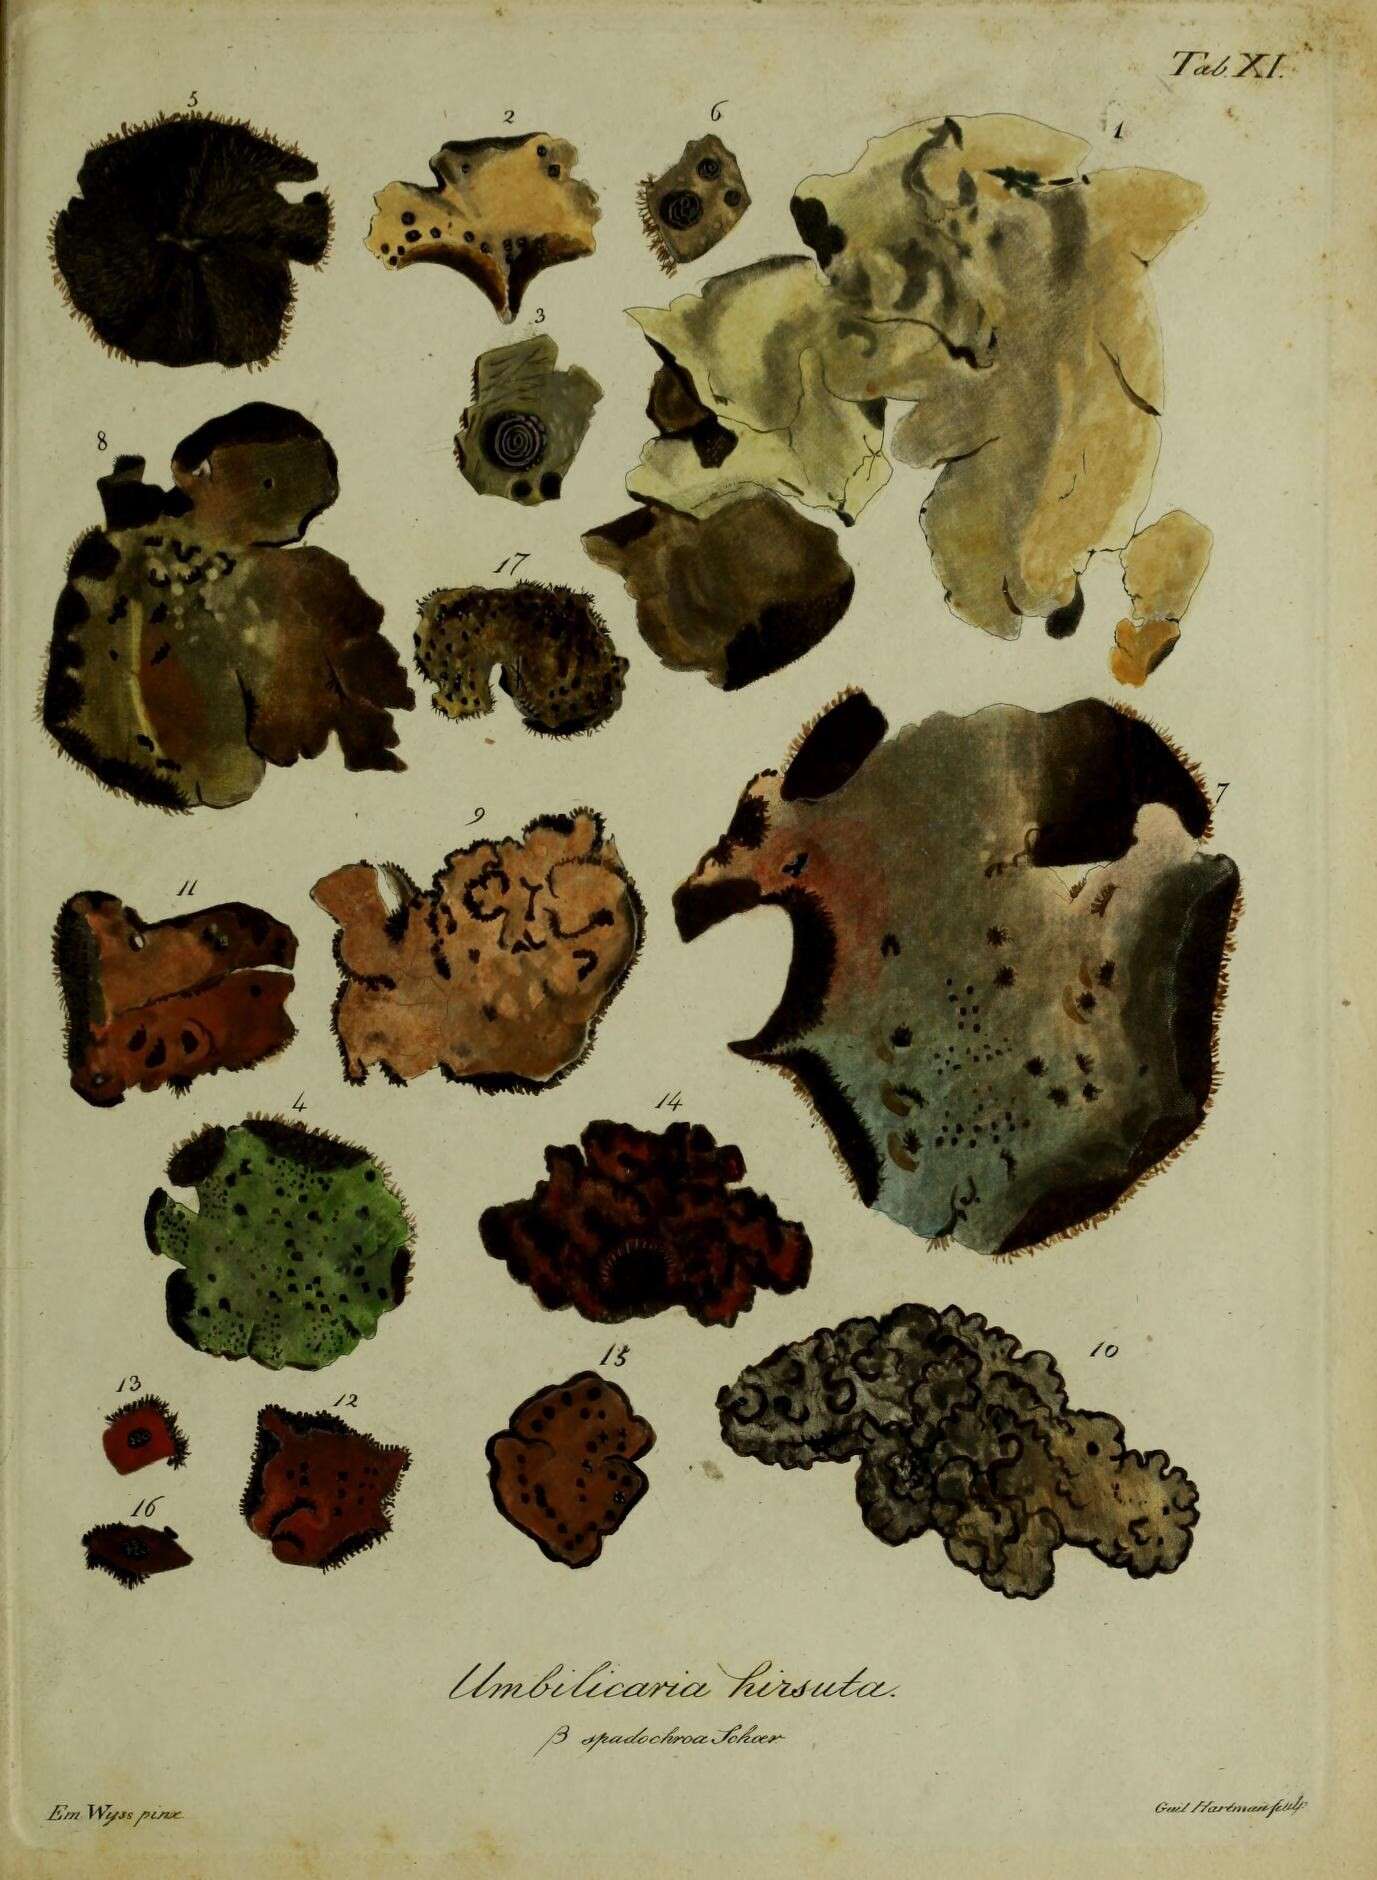 Image of hairy navel lichen